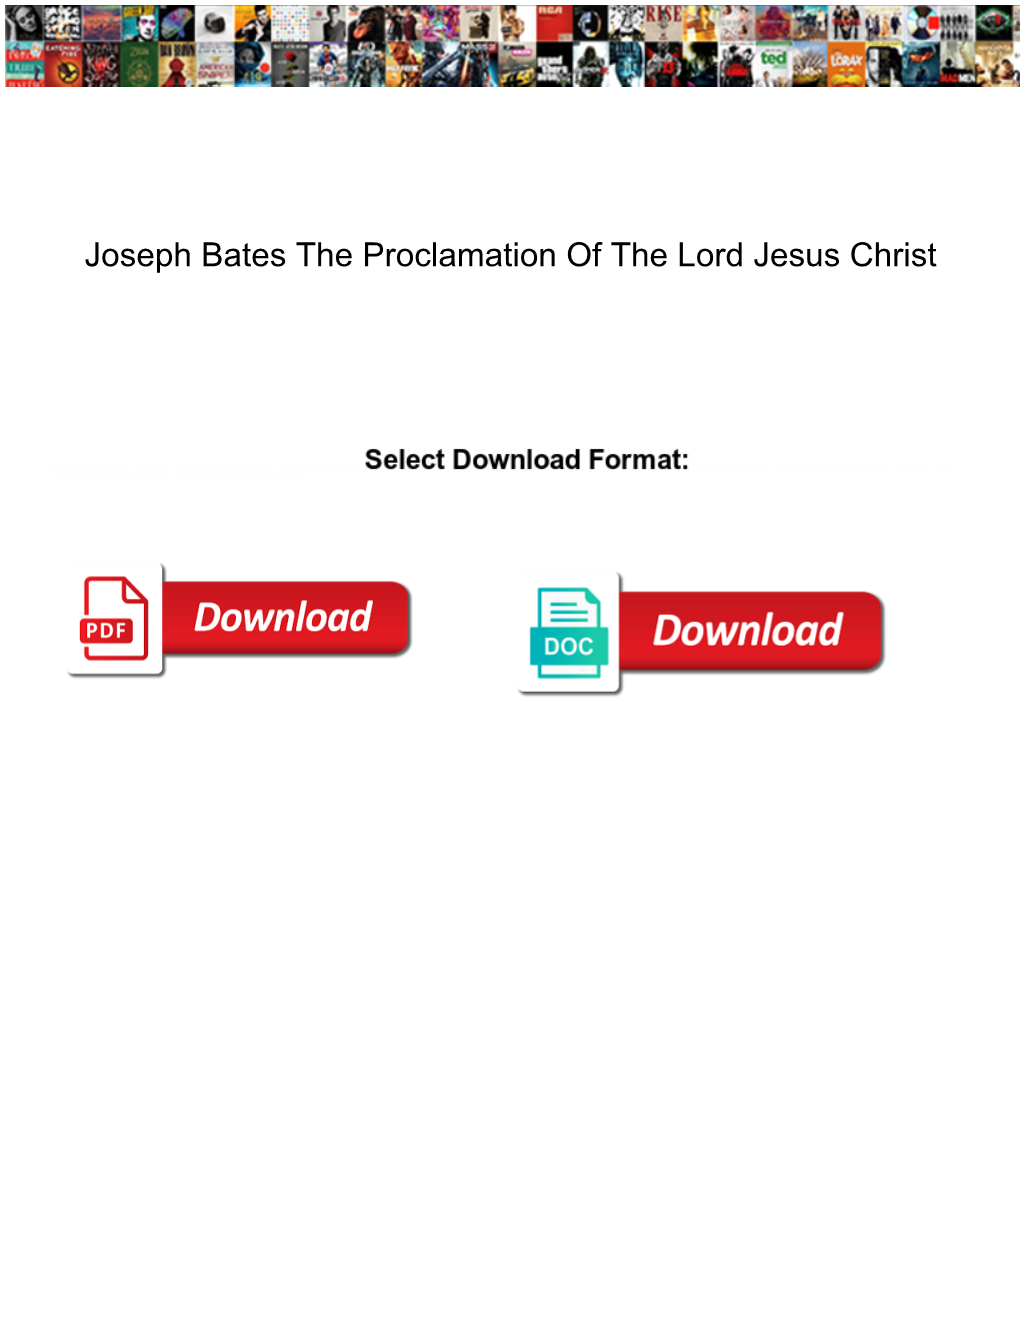 Joseph Bates the Proclamation of the Lord Jesus Christ